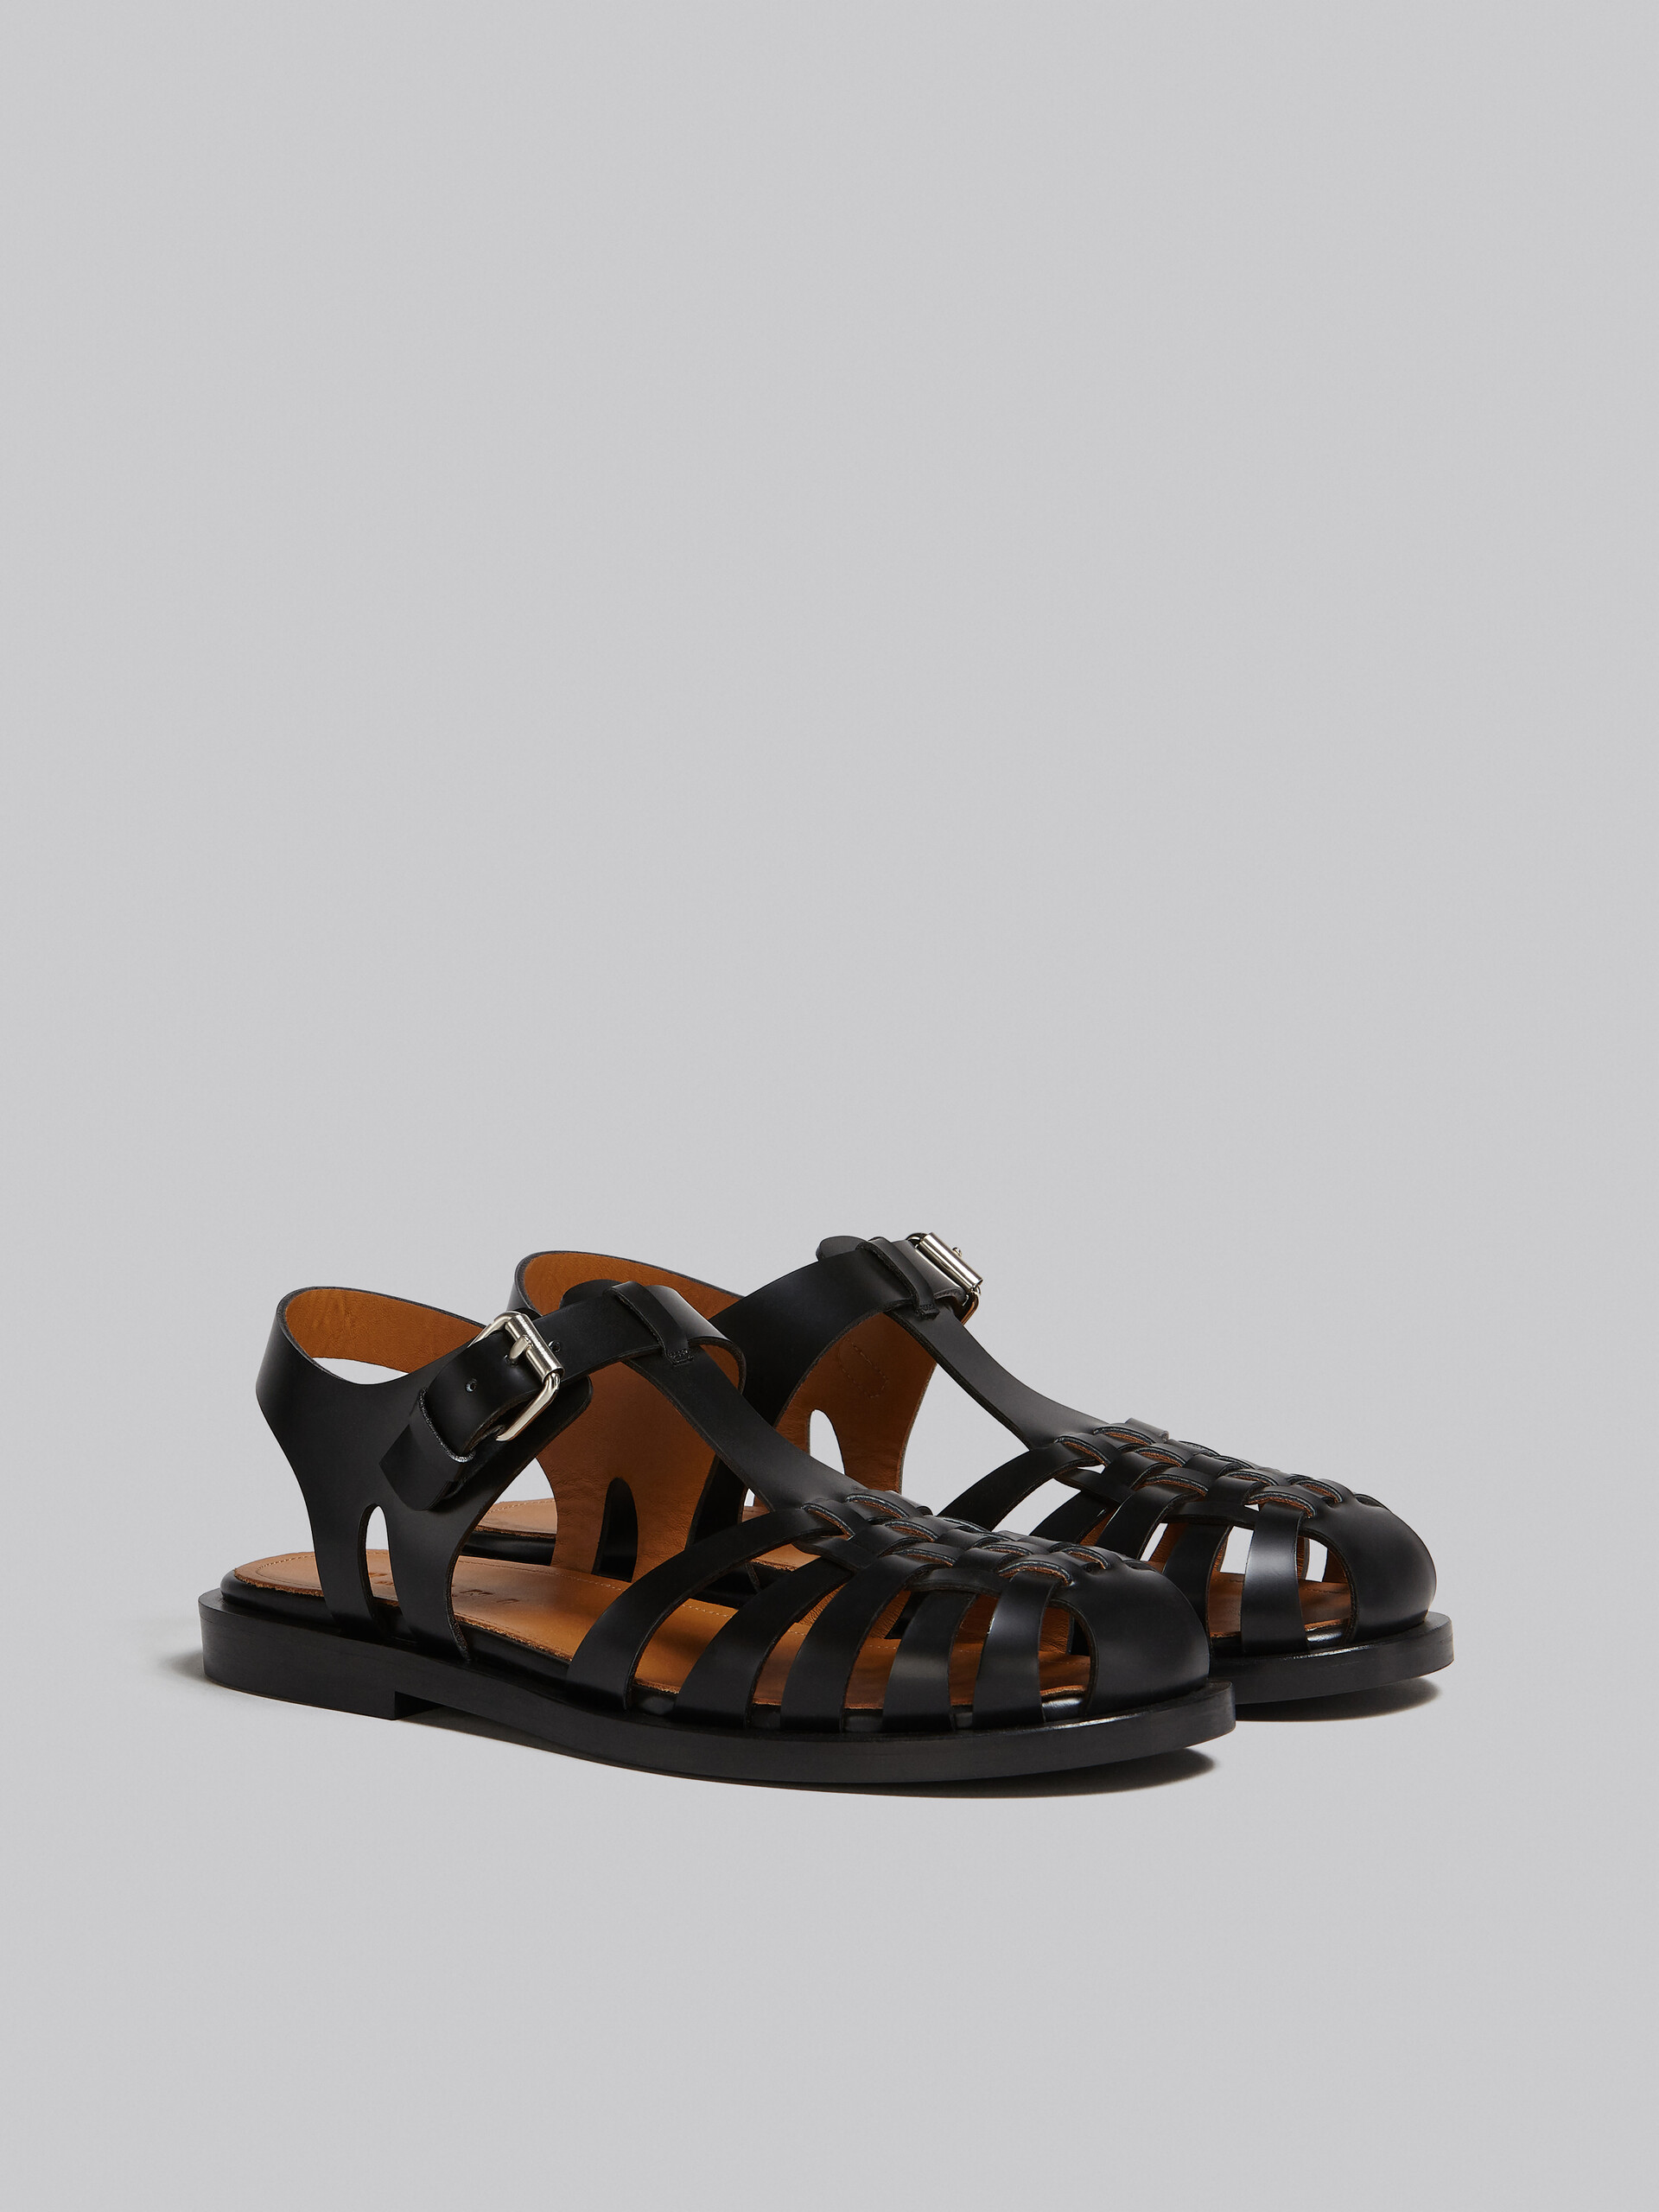 Black leather fisherman's sandal - Sandals - Image 2